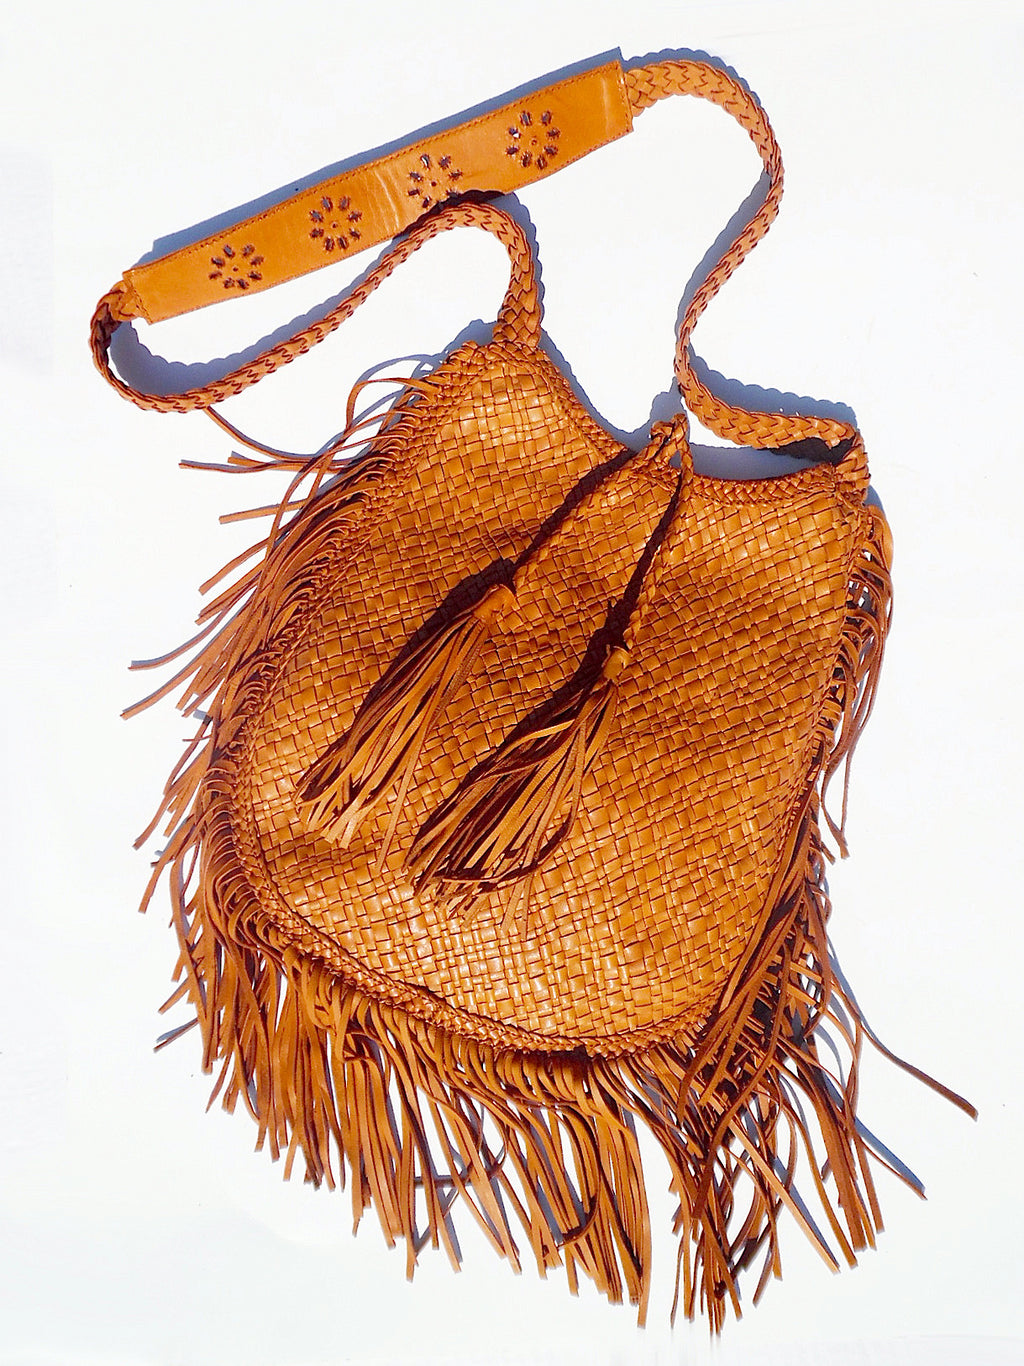 Hand Woven Leather Shoulder Cross Body Bag And Fringe Cognac